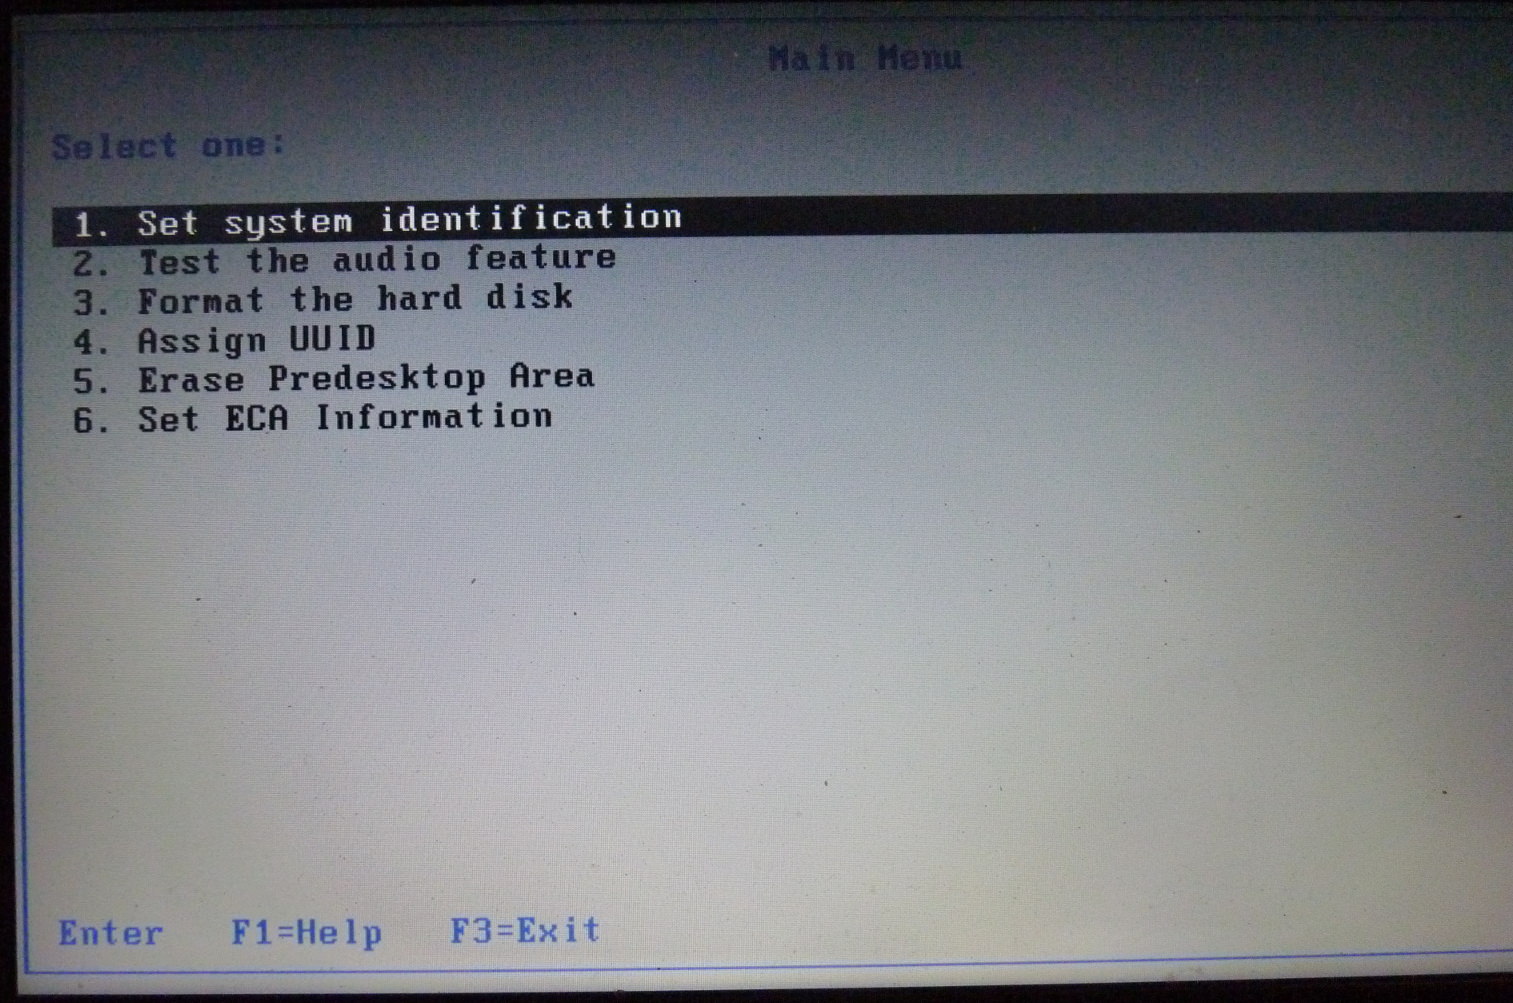 lenovo thinkpad hardware maintenance diskette version 1.76